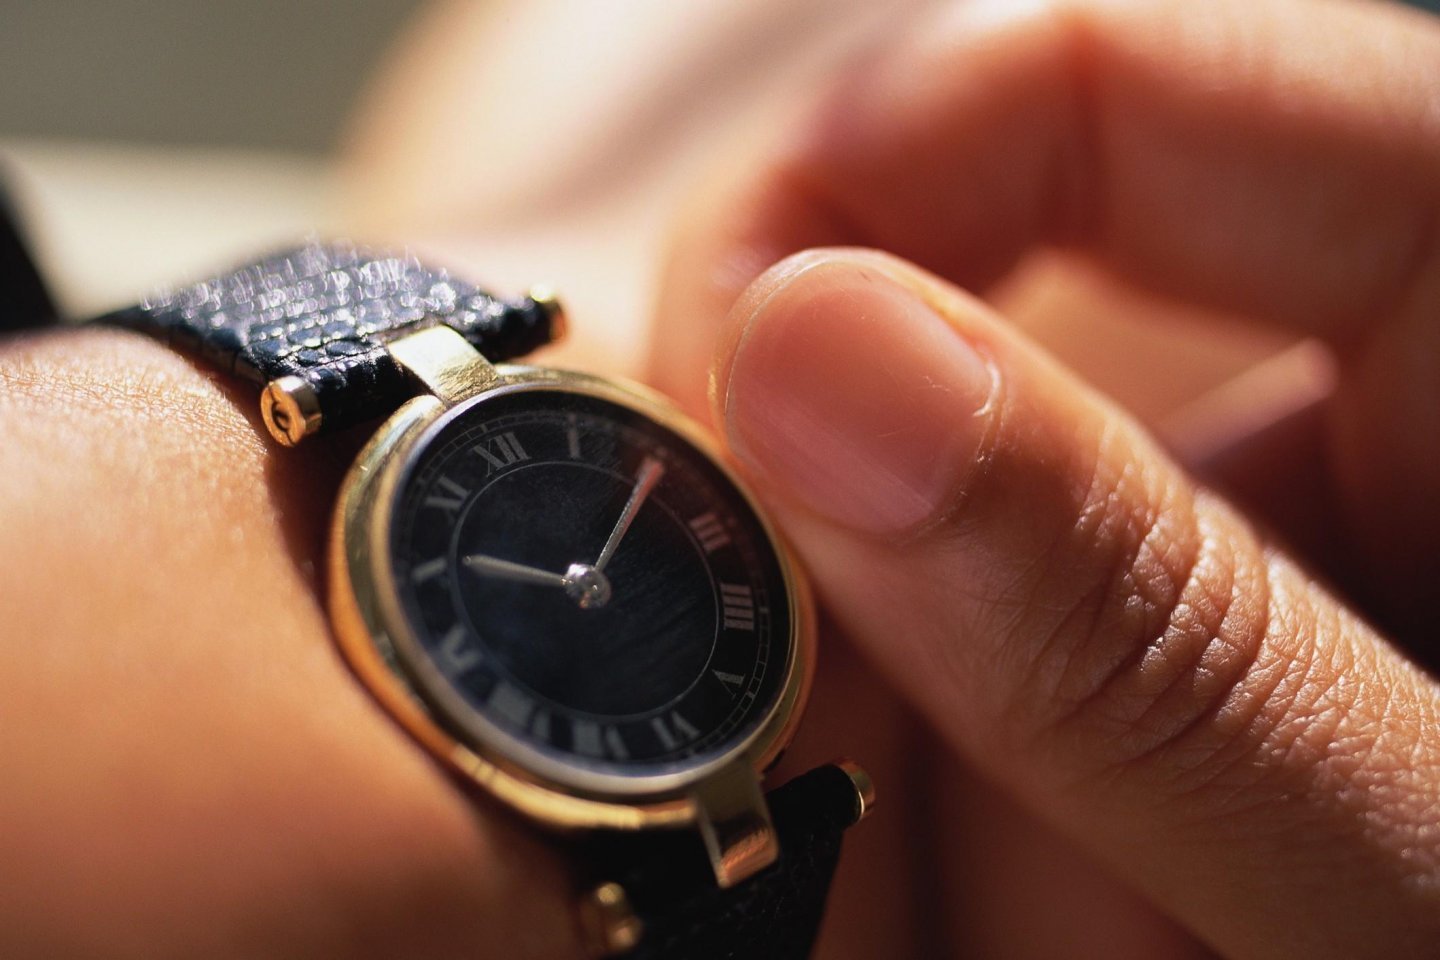 Как завести ручные часы. Часы на руке. Наручные часы на руке. Красивые часы на руку. Рука с часами.